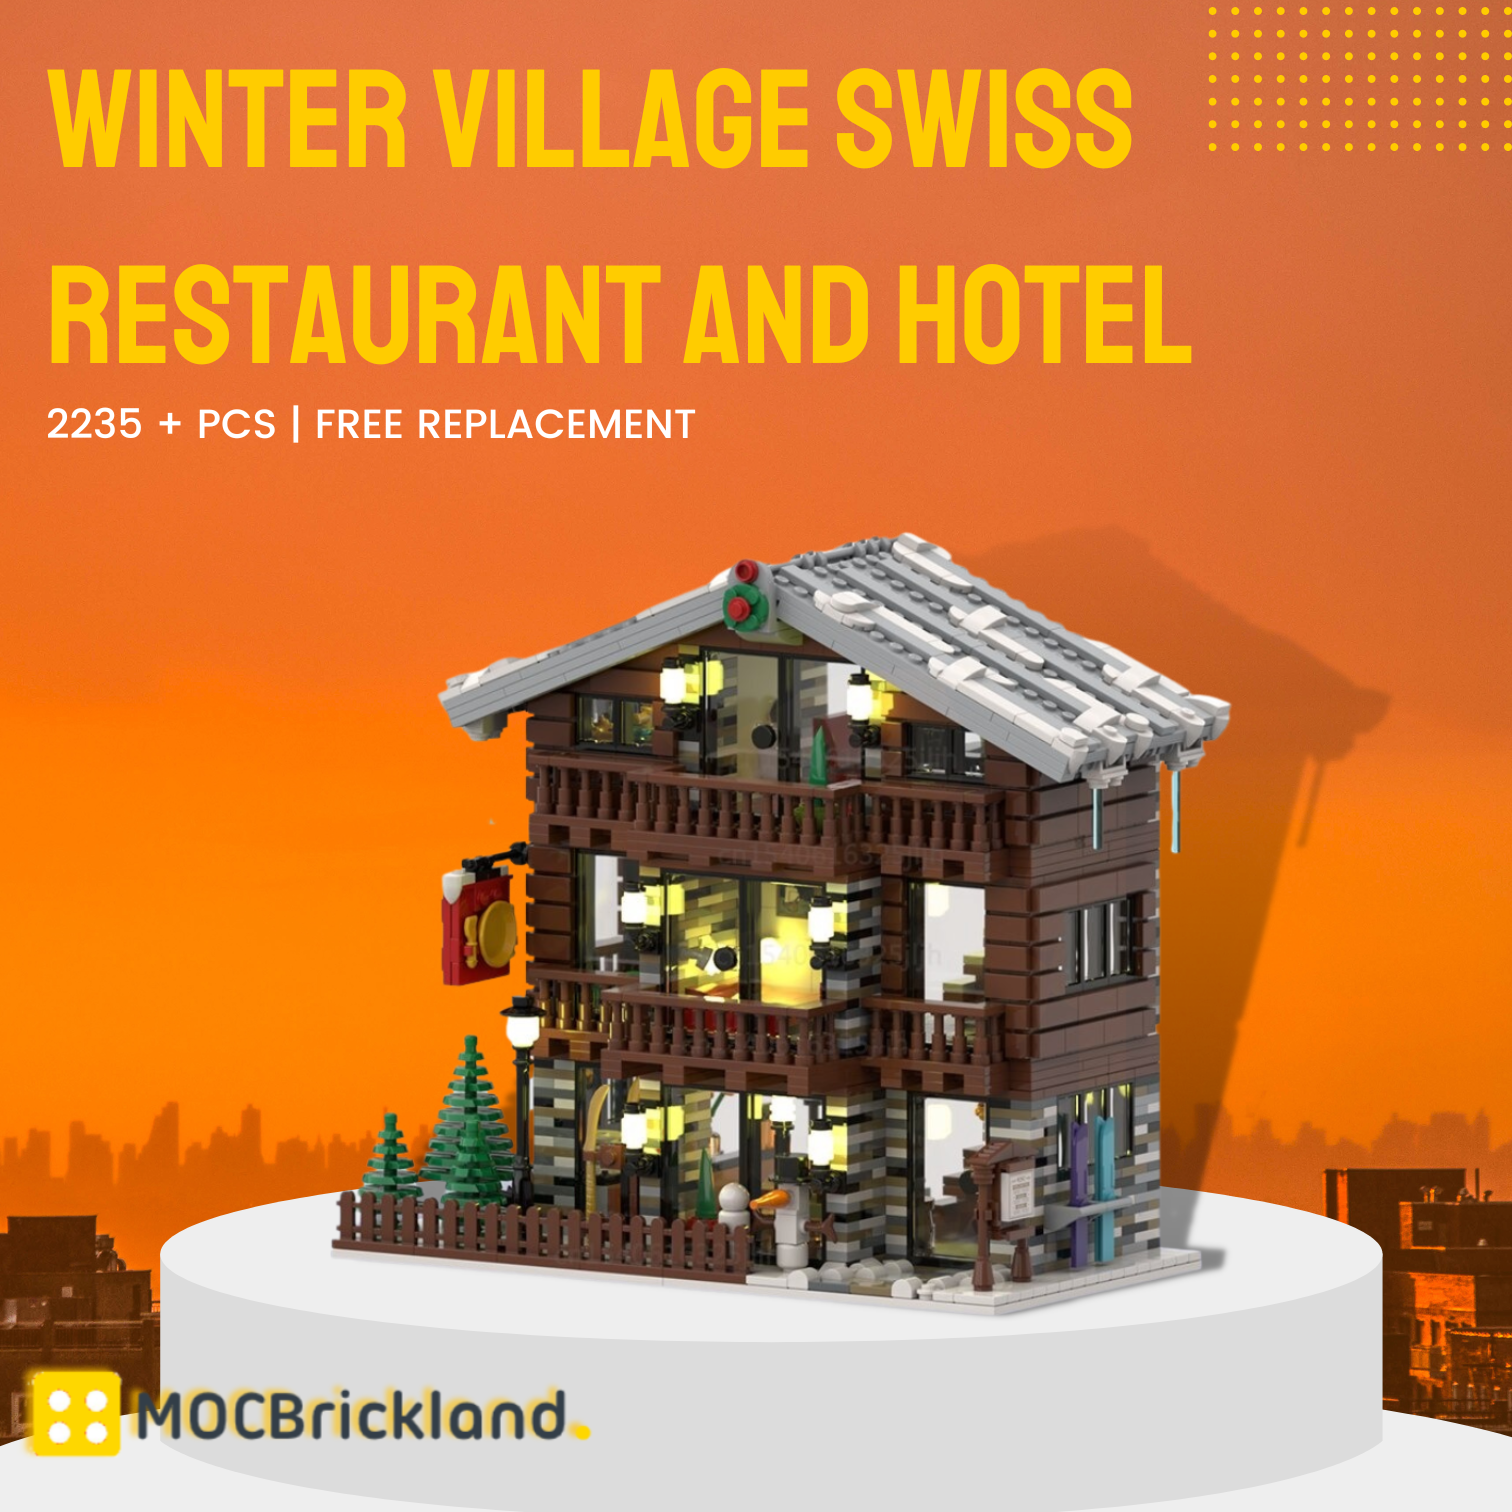 Winter Village Swiss Restaurant and Hotel MOC 91029 1